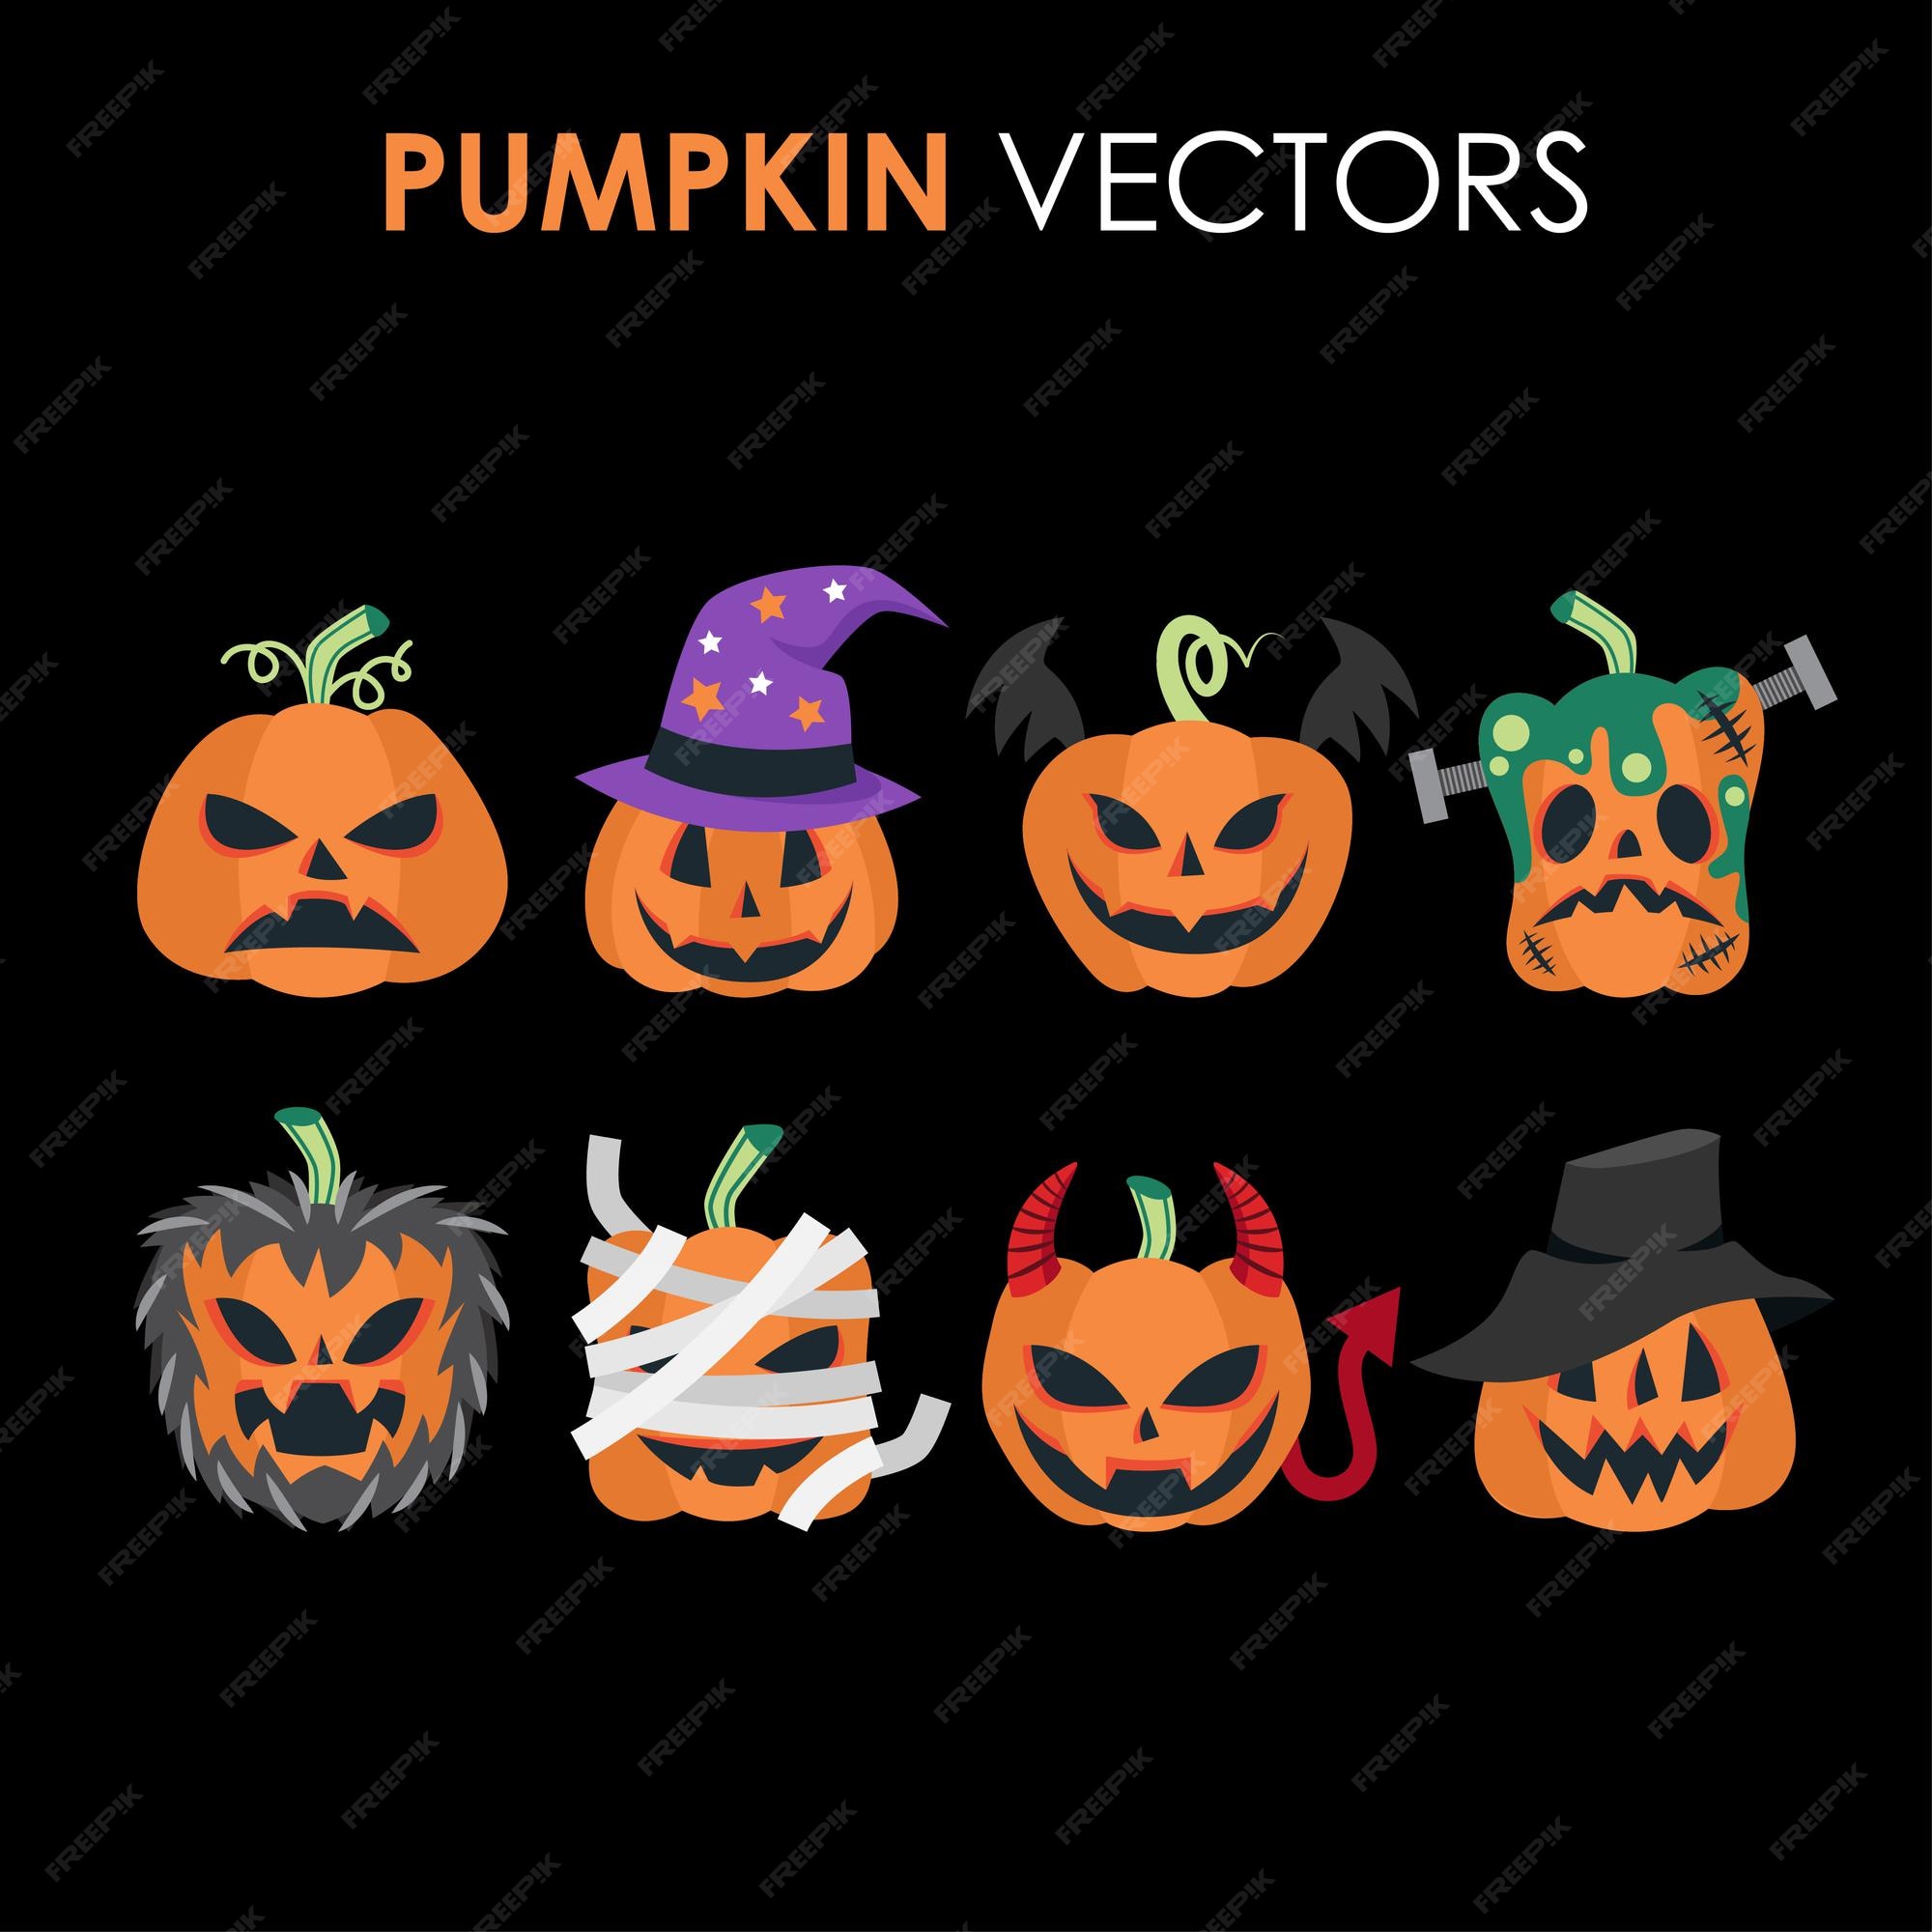 Vetores de Rostos Assustadores De Halloween Conjunto Vector e mais